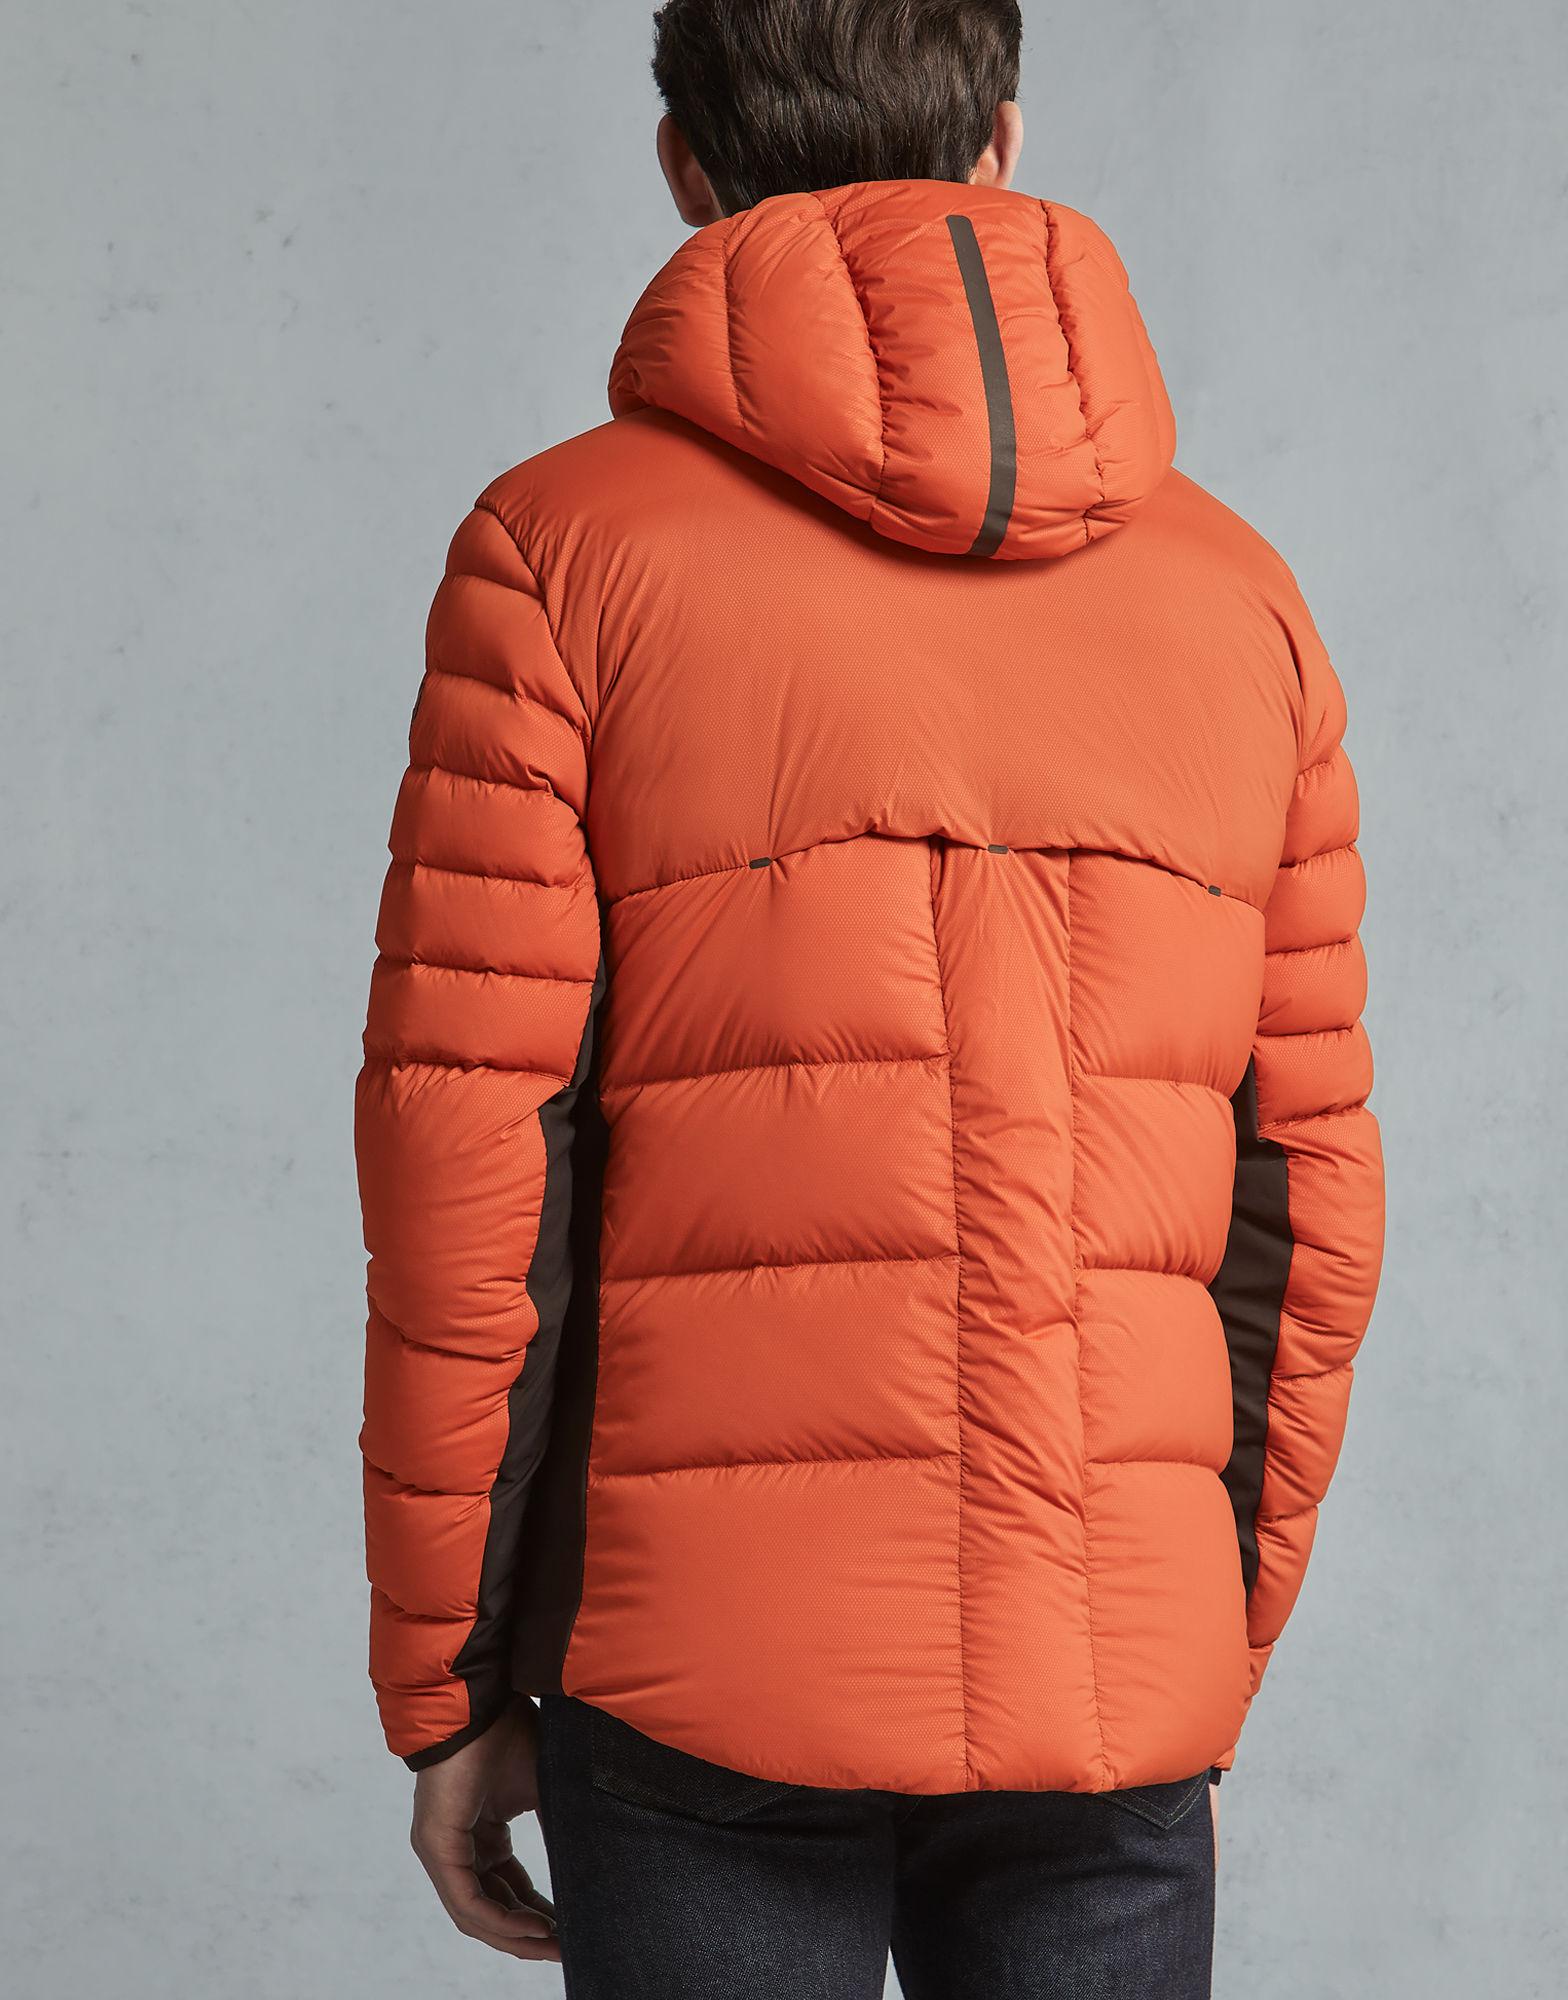 Belstaff Synthetic Atlas Padded Jacket - Online Exclusive Orange for Men -  Lyst